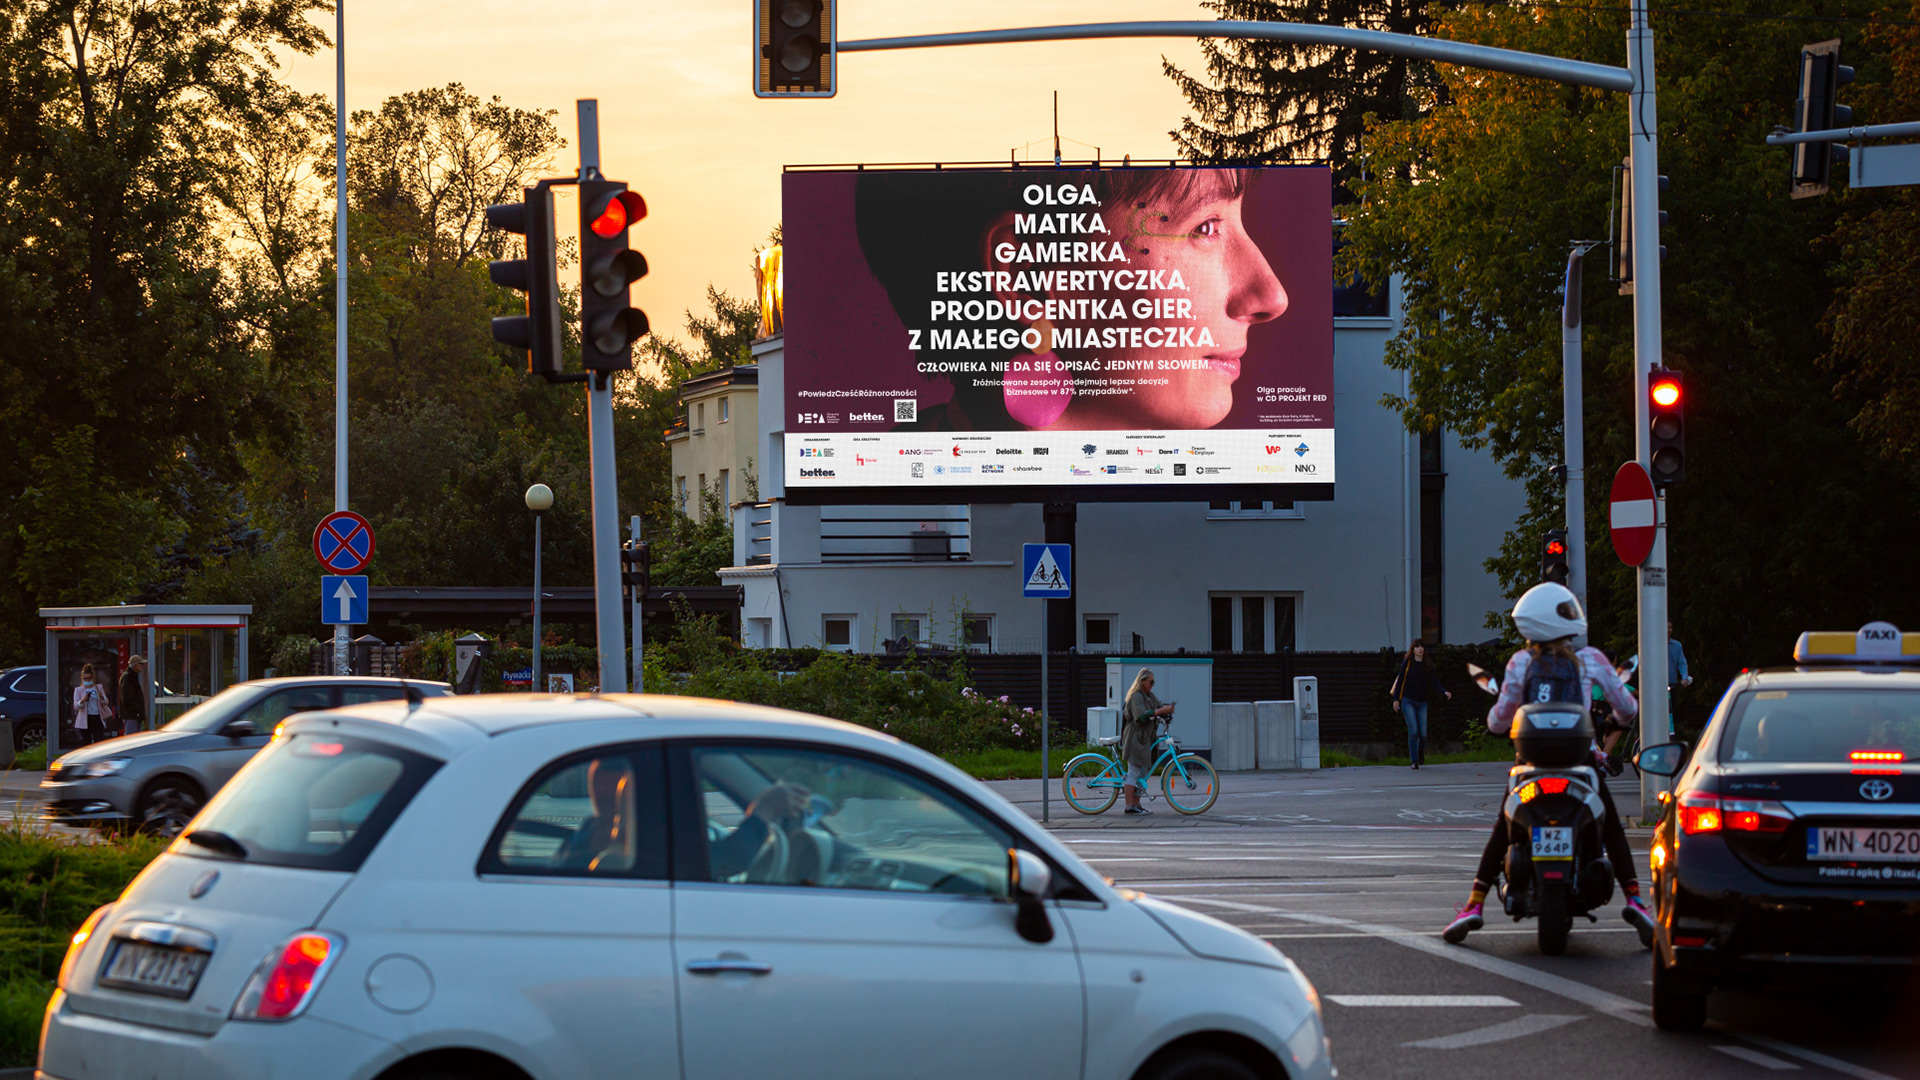 Reklama Warszawa, ul. Racławicka Wołoska  Rondo Schumana - tablica reklamowa, ekran LED.jpg